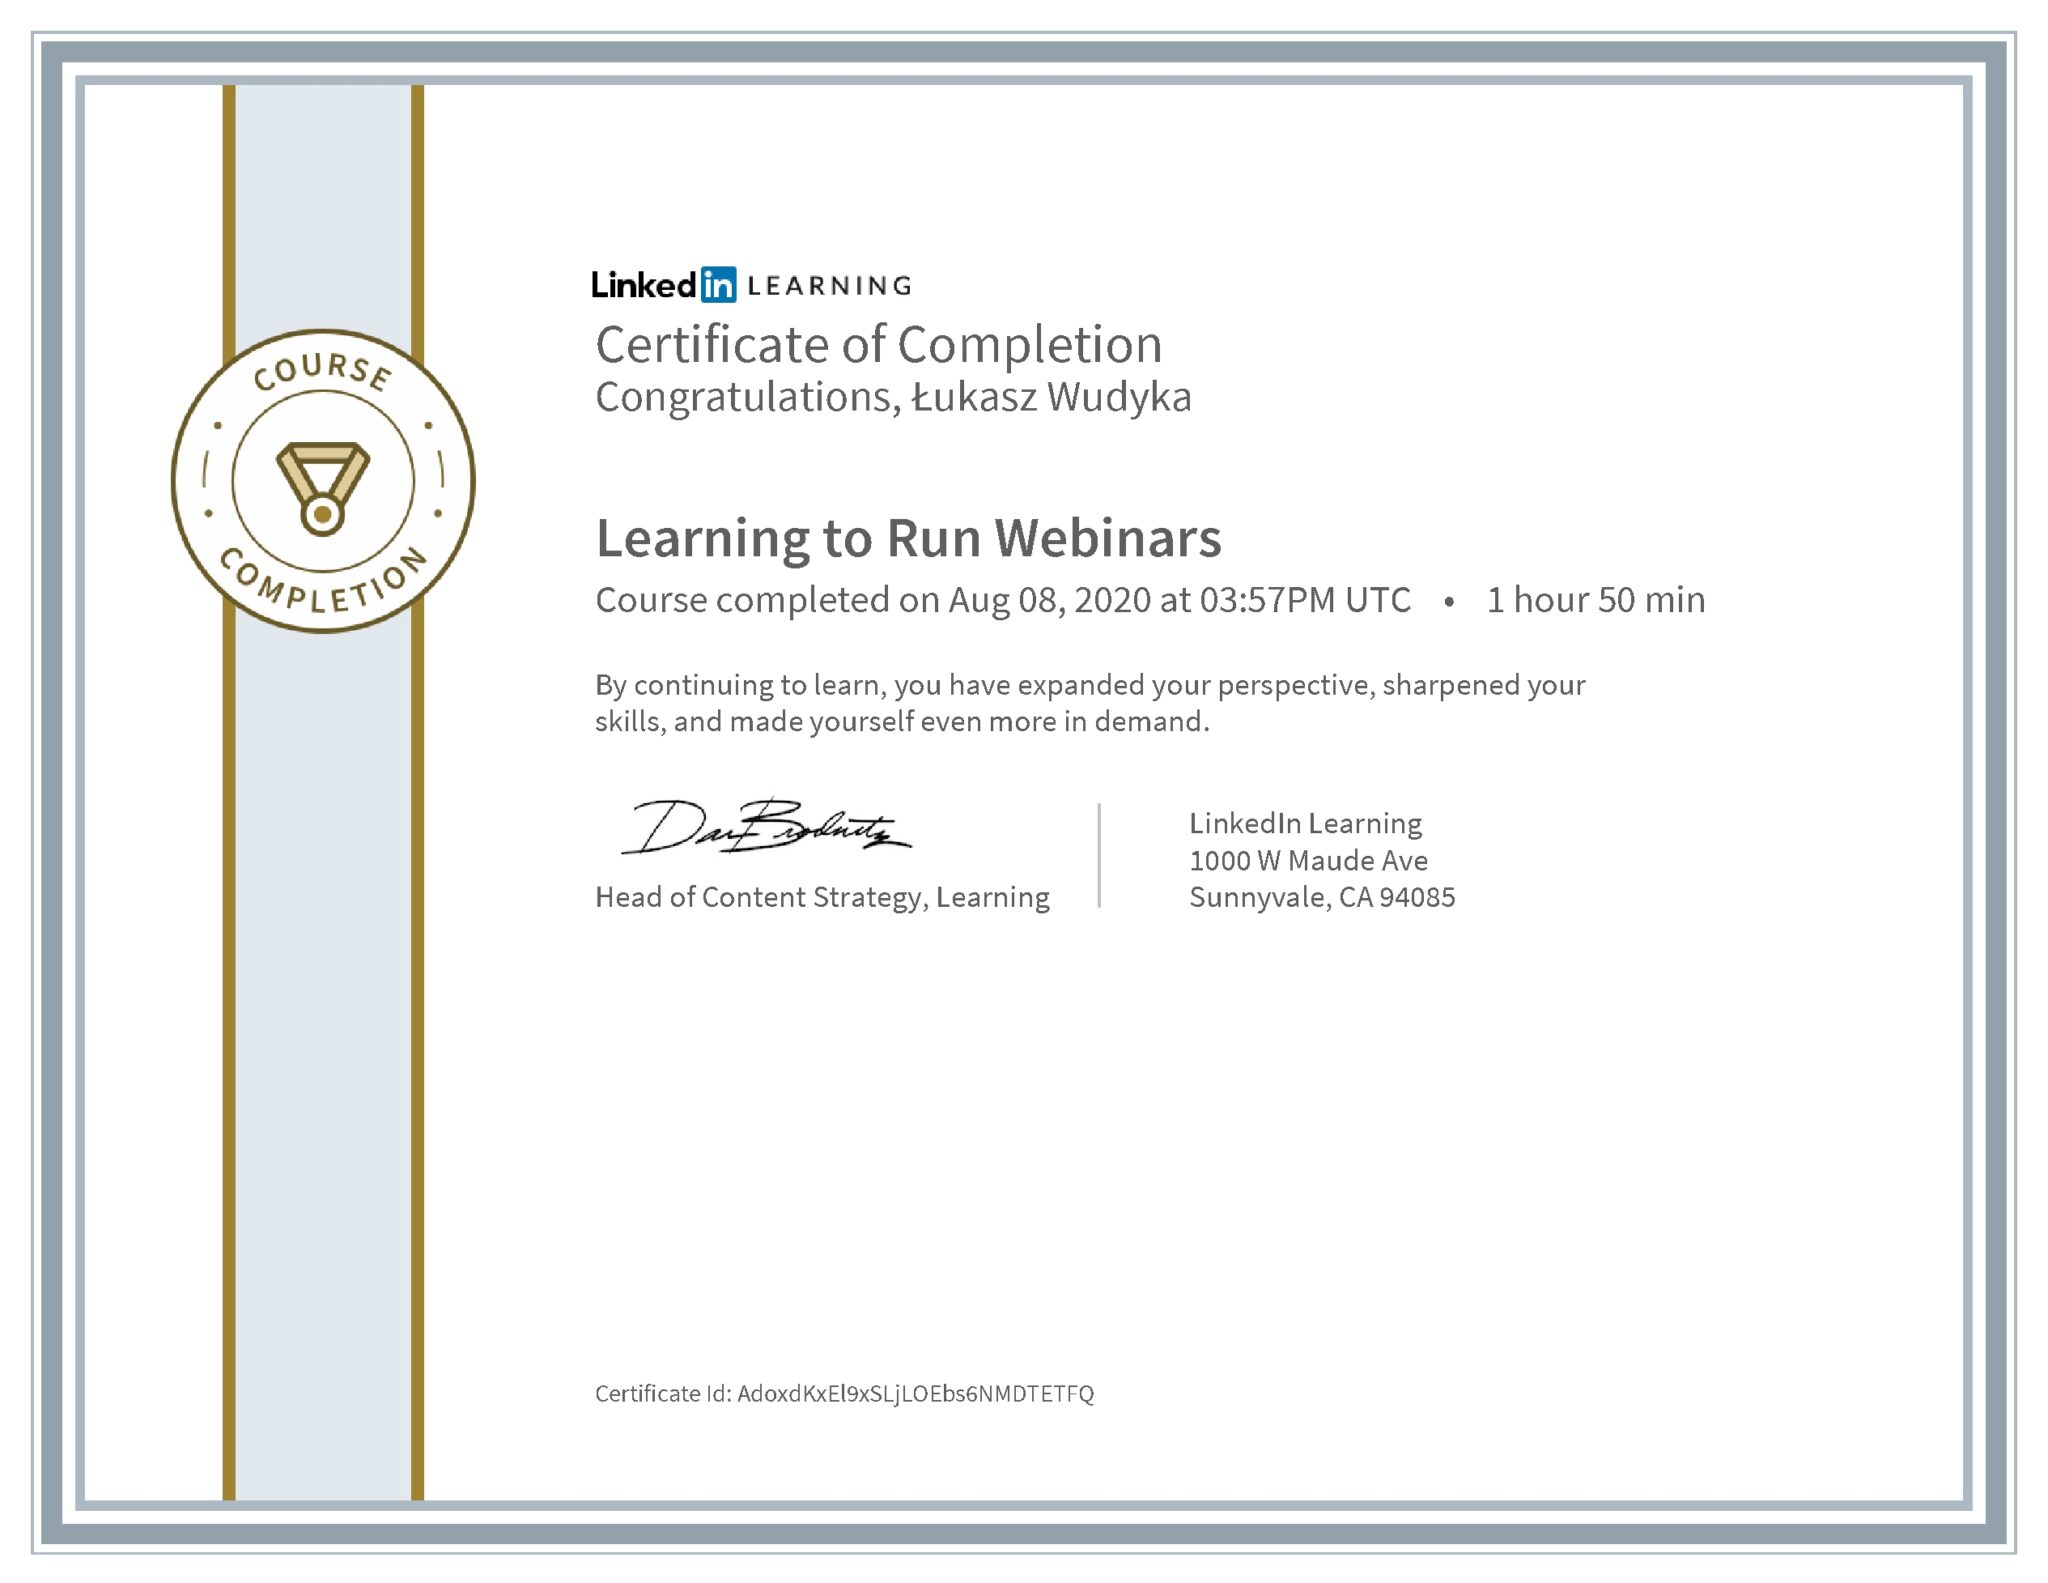 Łukasz Wudyka certyfikat LinkedIn Learning to Run Webinars